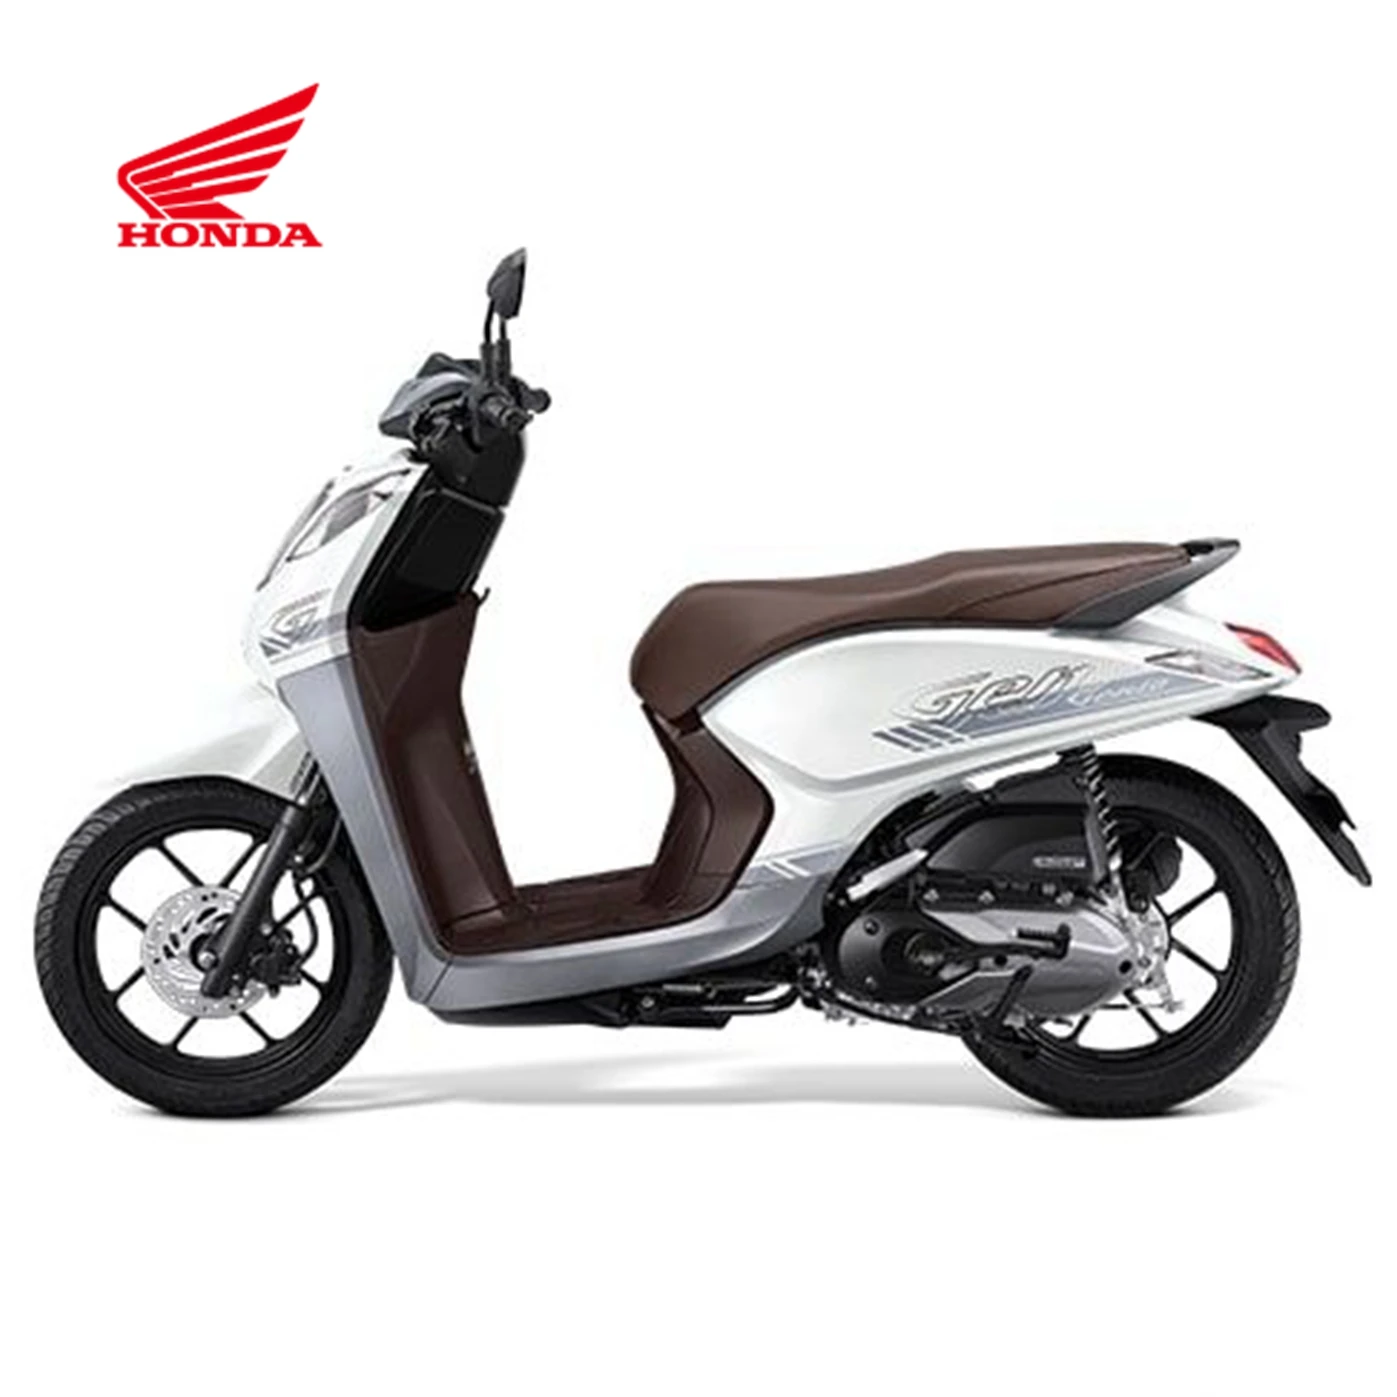 Hot Indonesia Honda Genio Scooter - Buy Honda Honda Genio,Indonesia Honda Honda Genio Scooter Product on